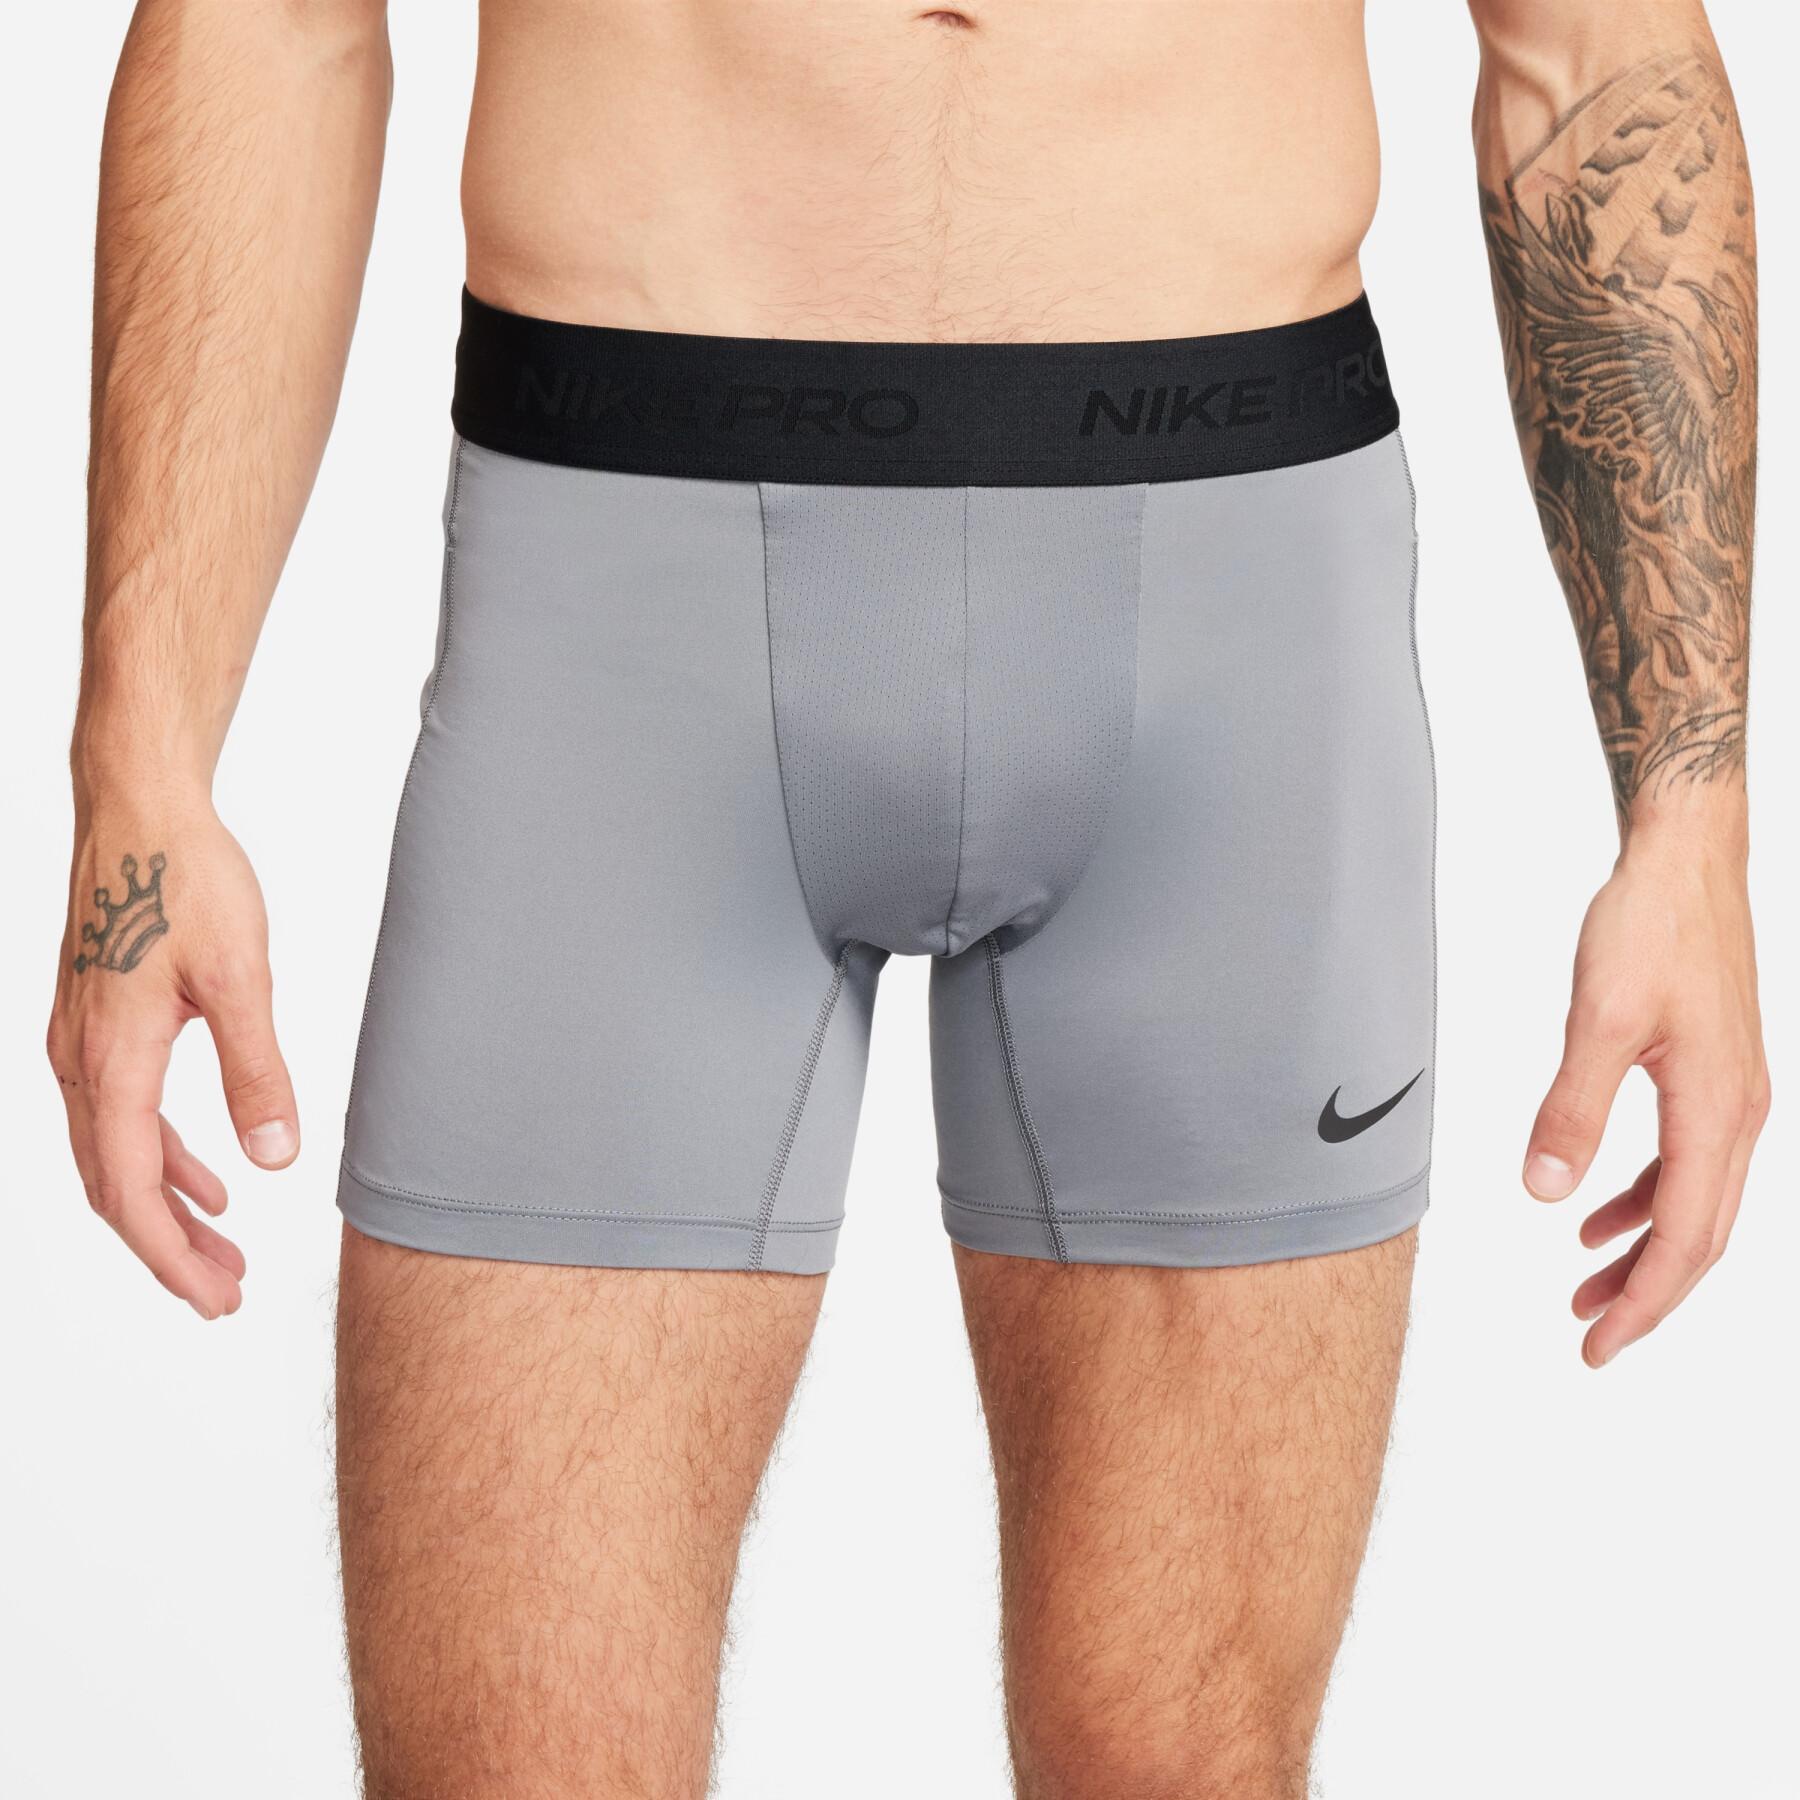 Pantalones cortos Nike Dri-FIT Brief